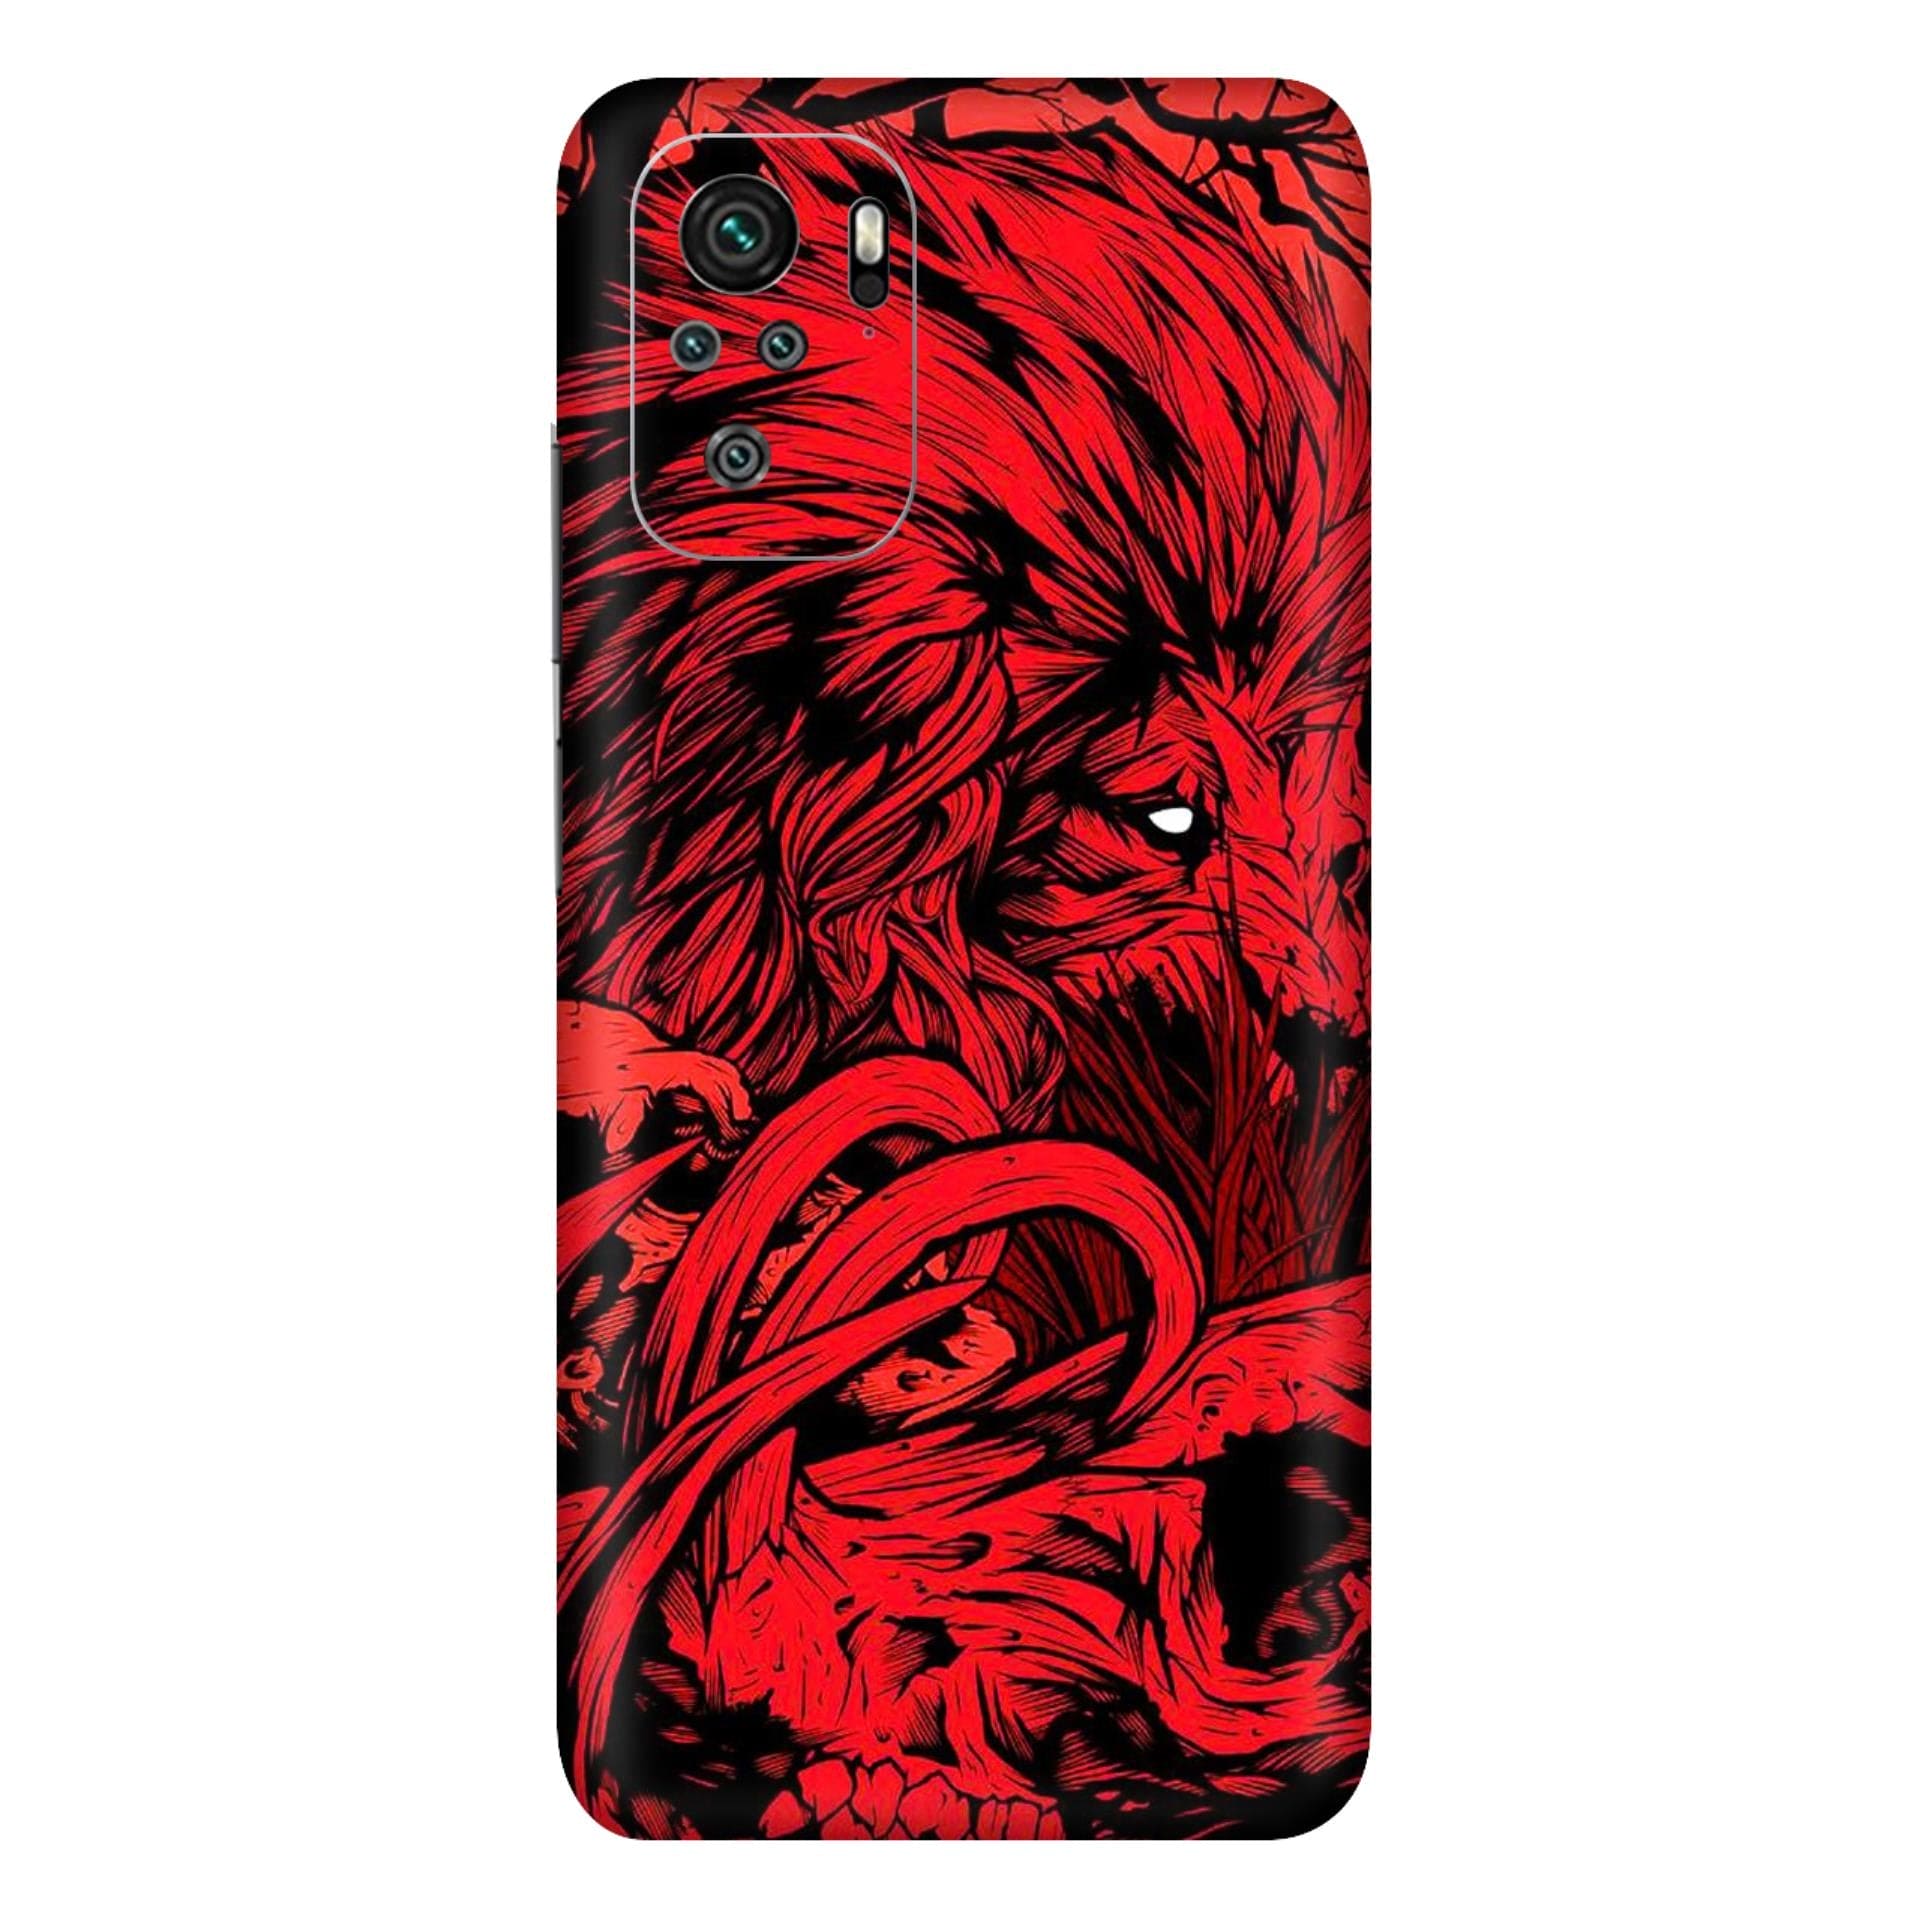 Redmi Note 10 Fiery Lion skins